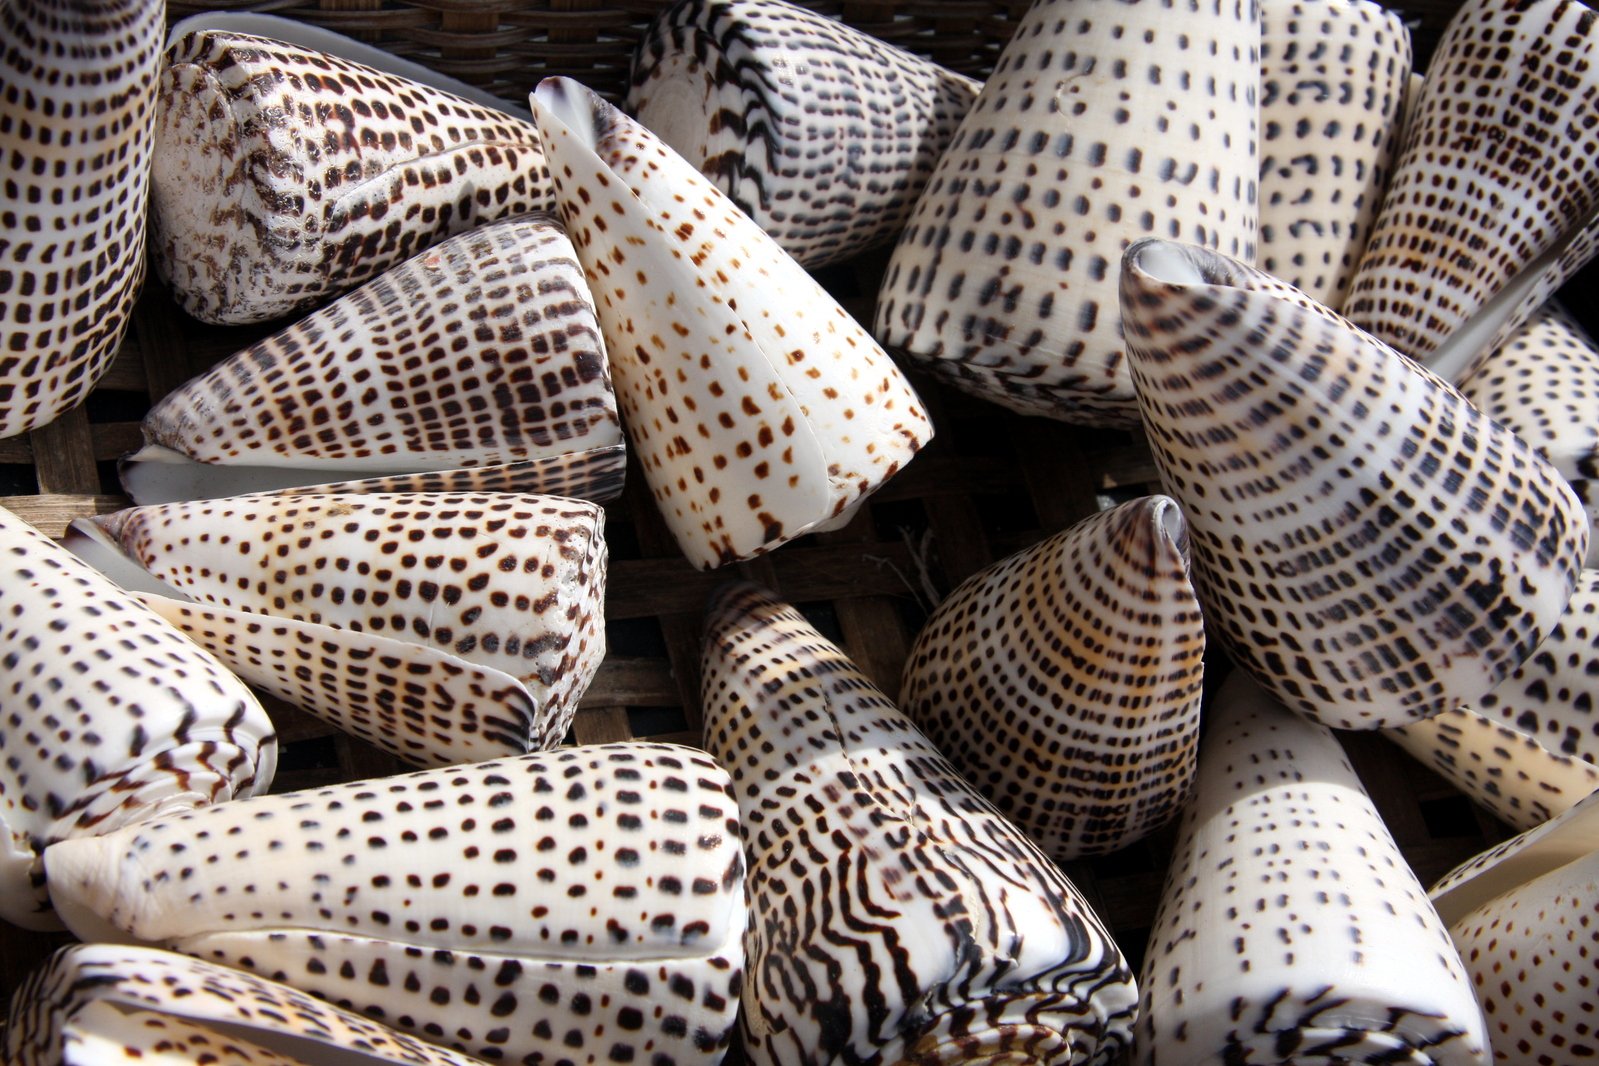 decorative animal shells displayed in wicker basket